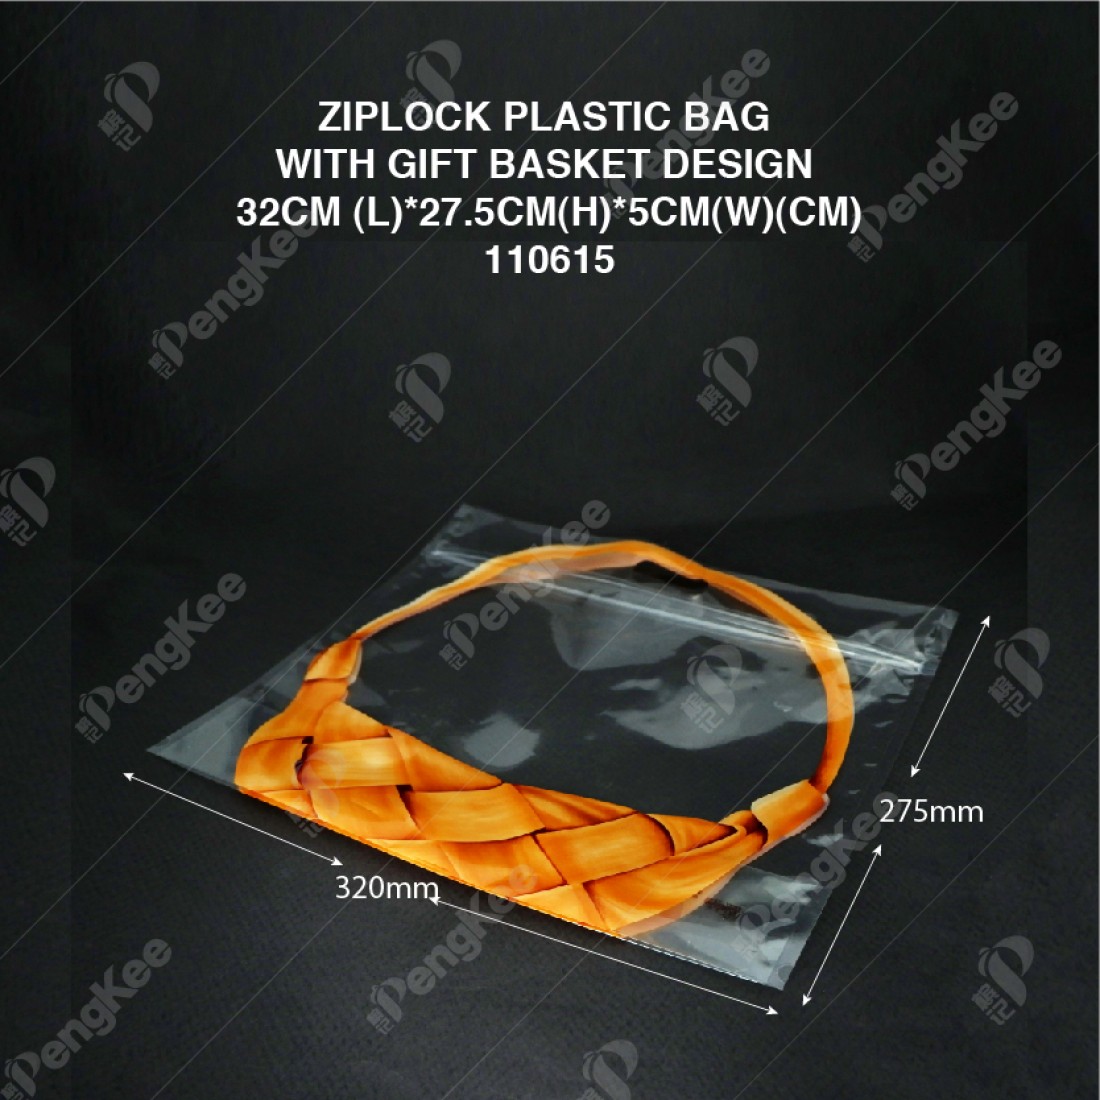 ZIPLOCK PLASTIC BAG WITH GIFT BASKET DESIGN 32CM (L)*27.5CM(H)*5CM(W)(CM) 100'S